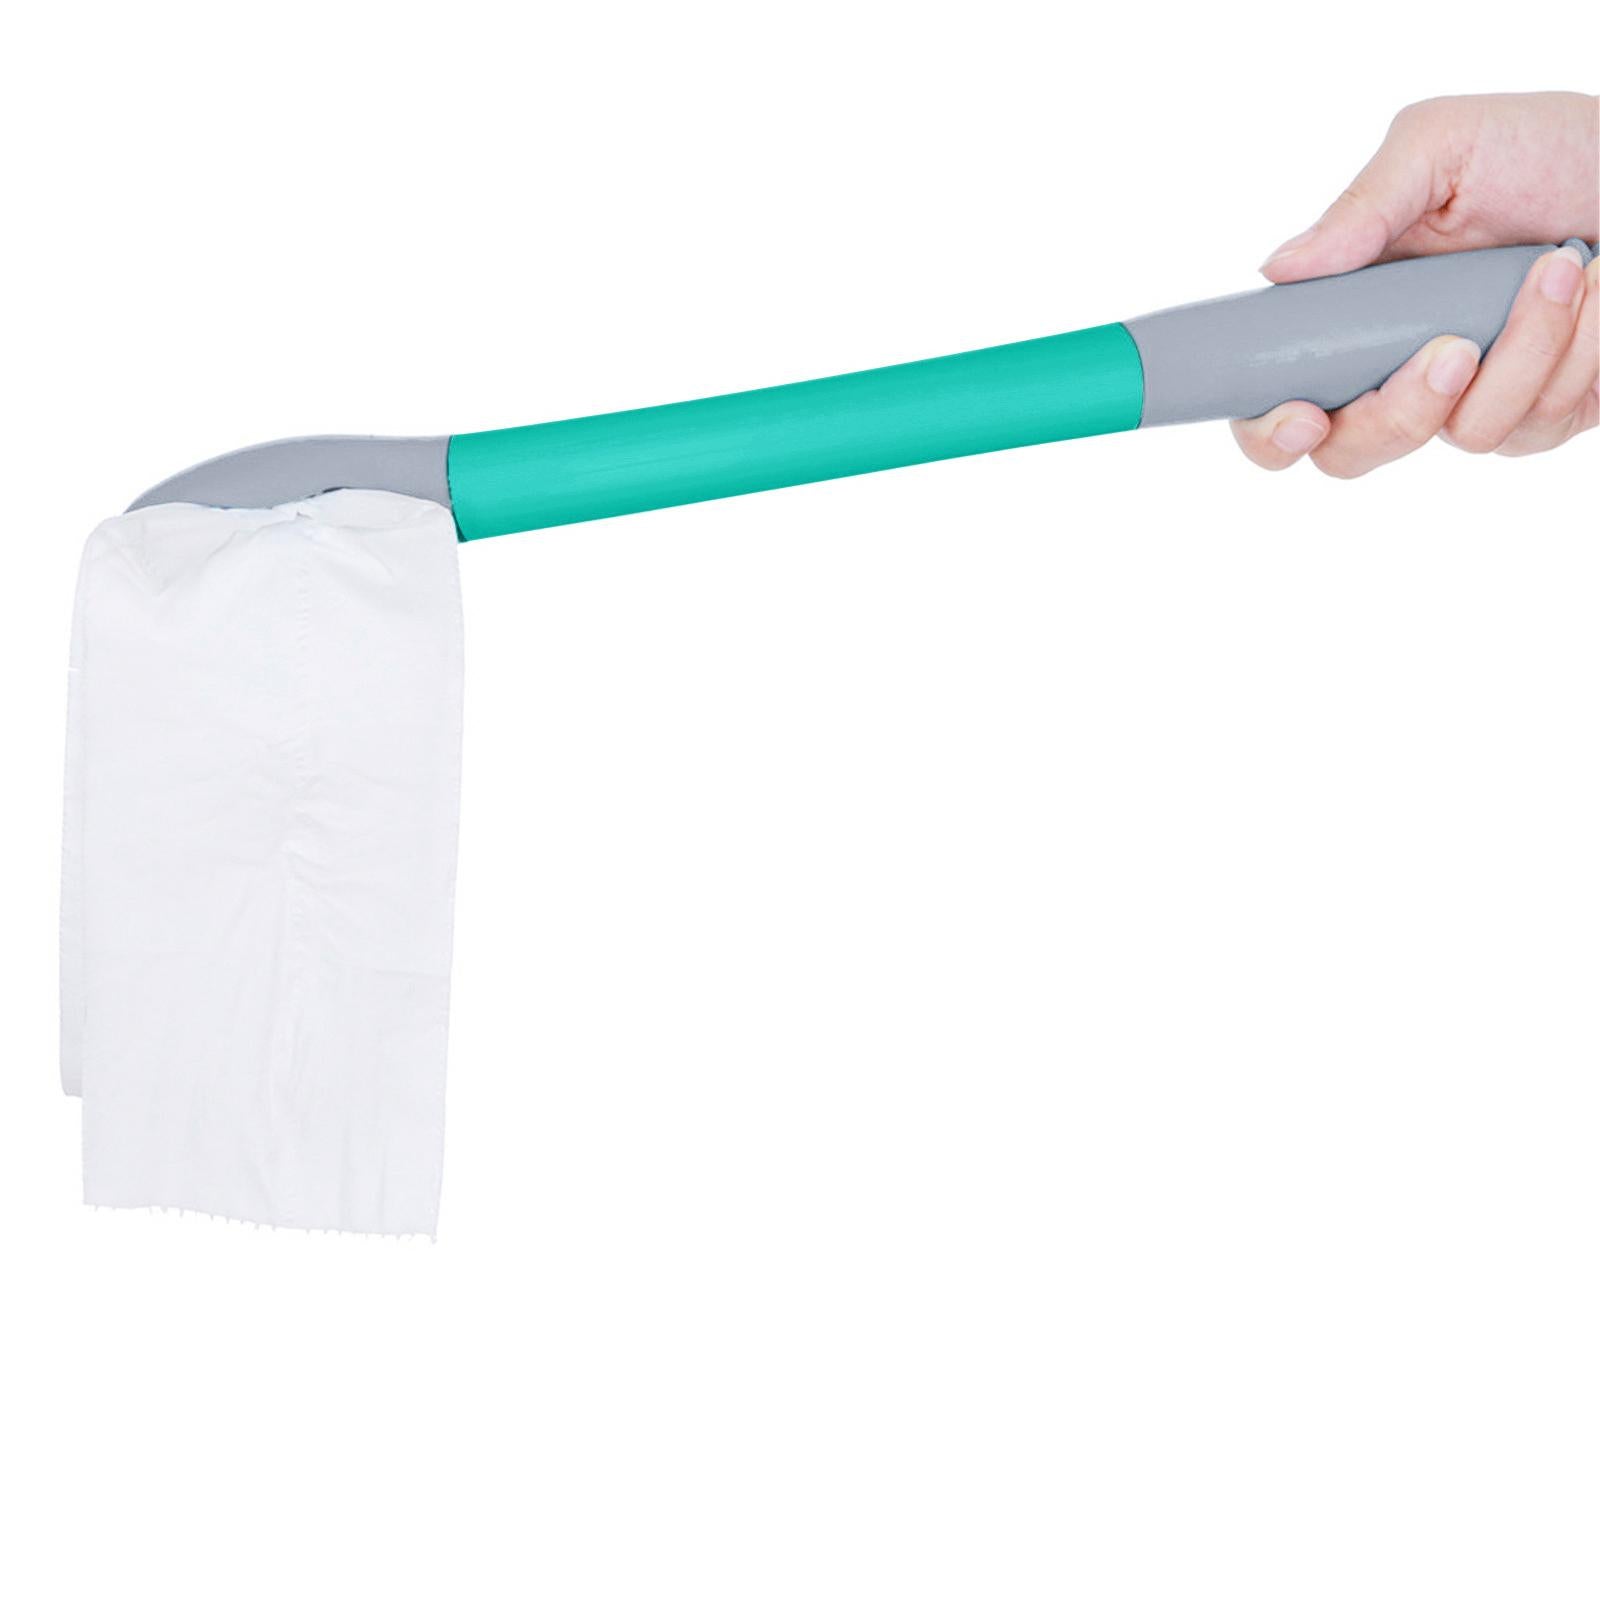 Bottom Toileting Aid Tool Handled Tissue Grip Helper Grey Blue